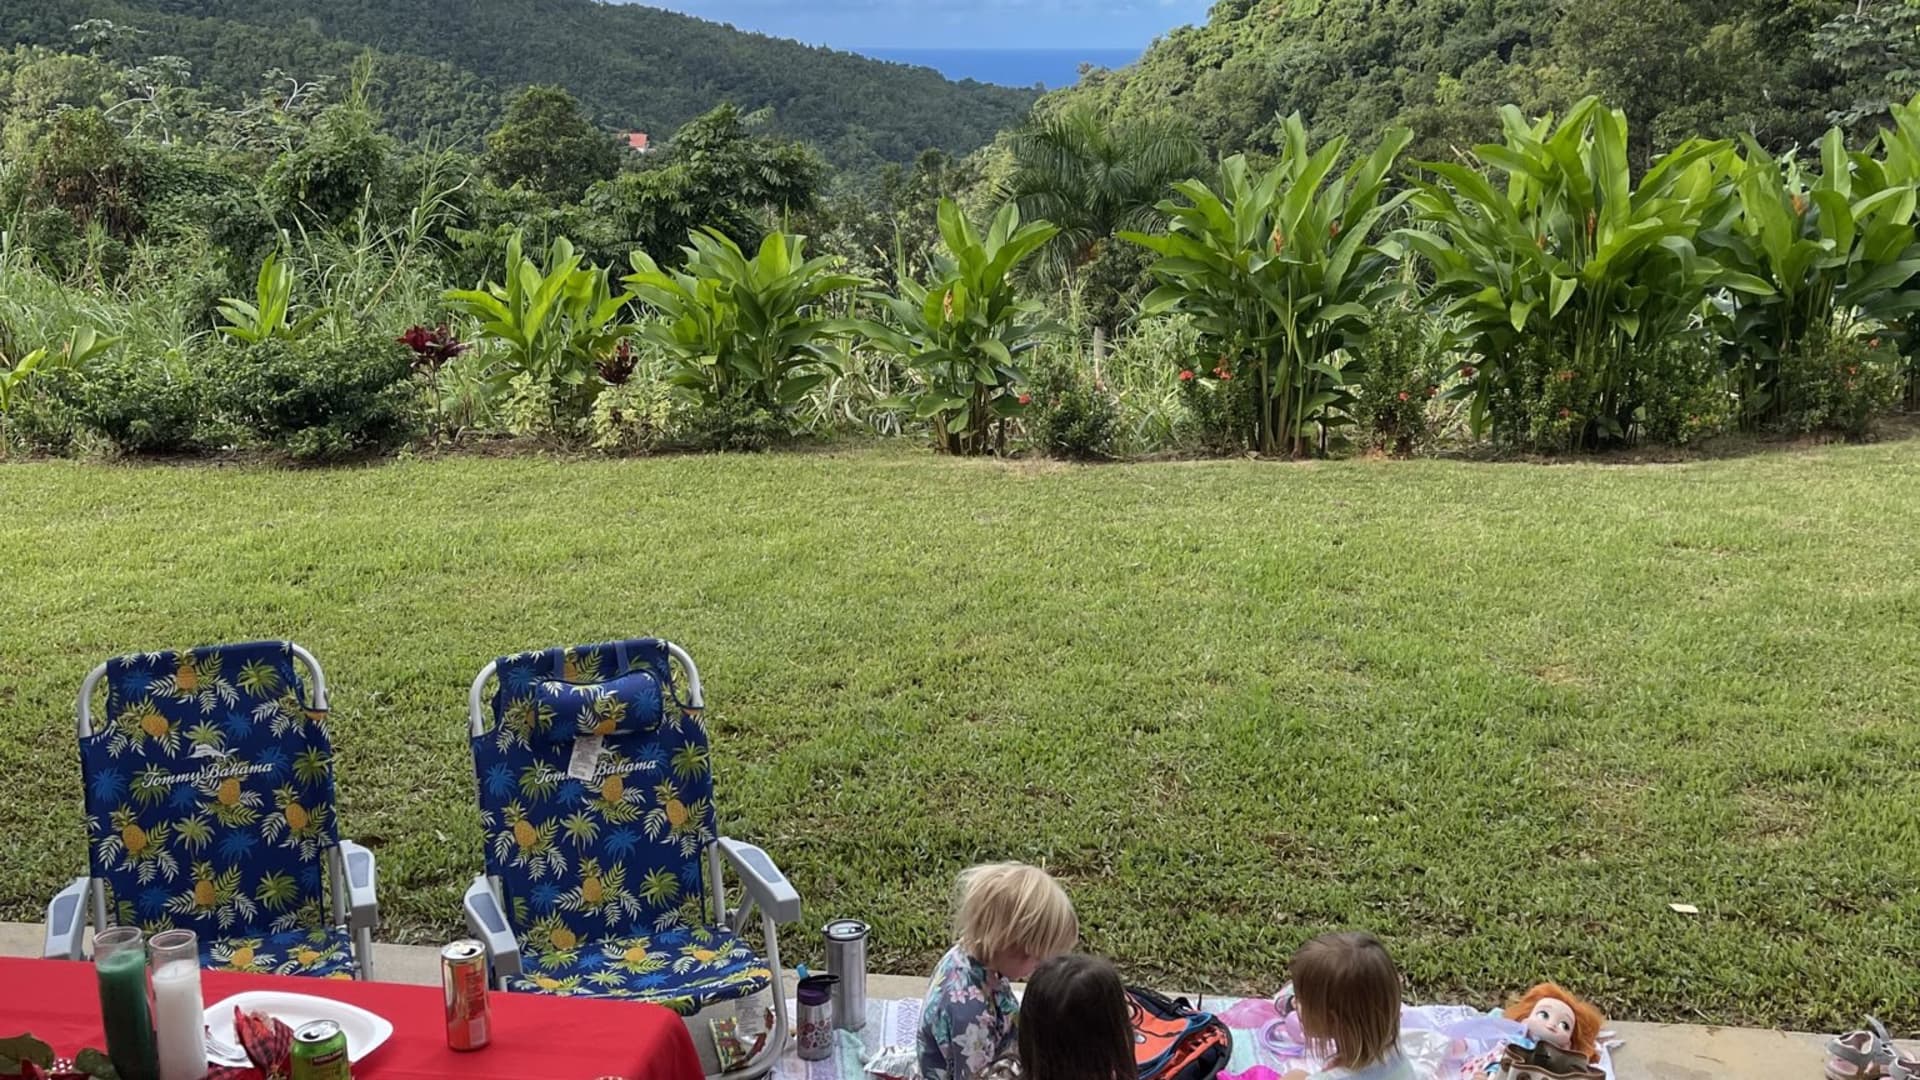 David Johnston's family celebrating Christmas in the hills of Puerto Rico